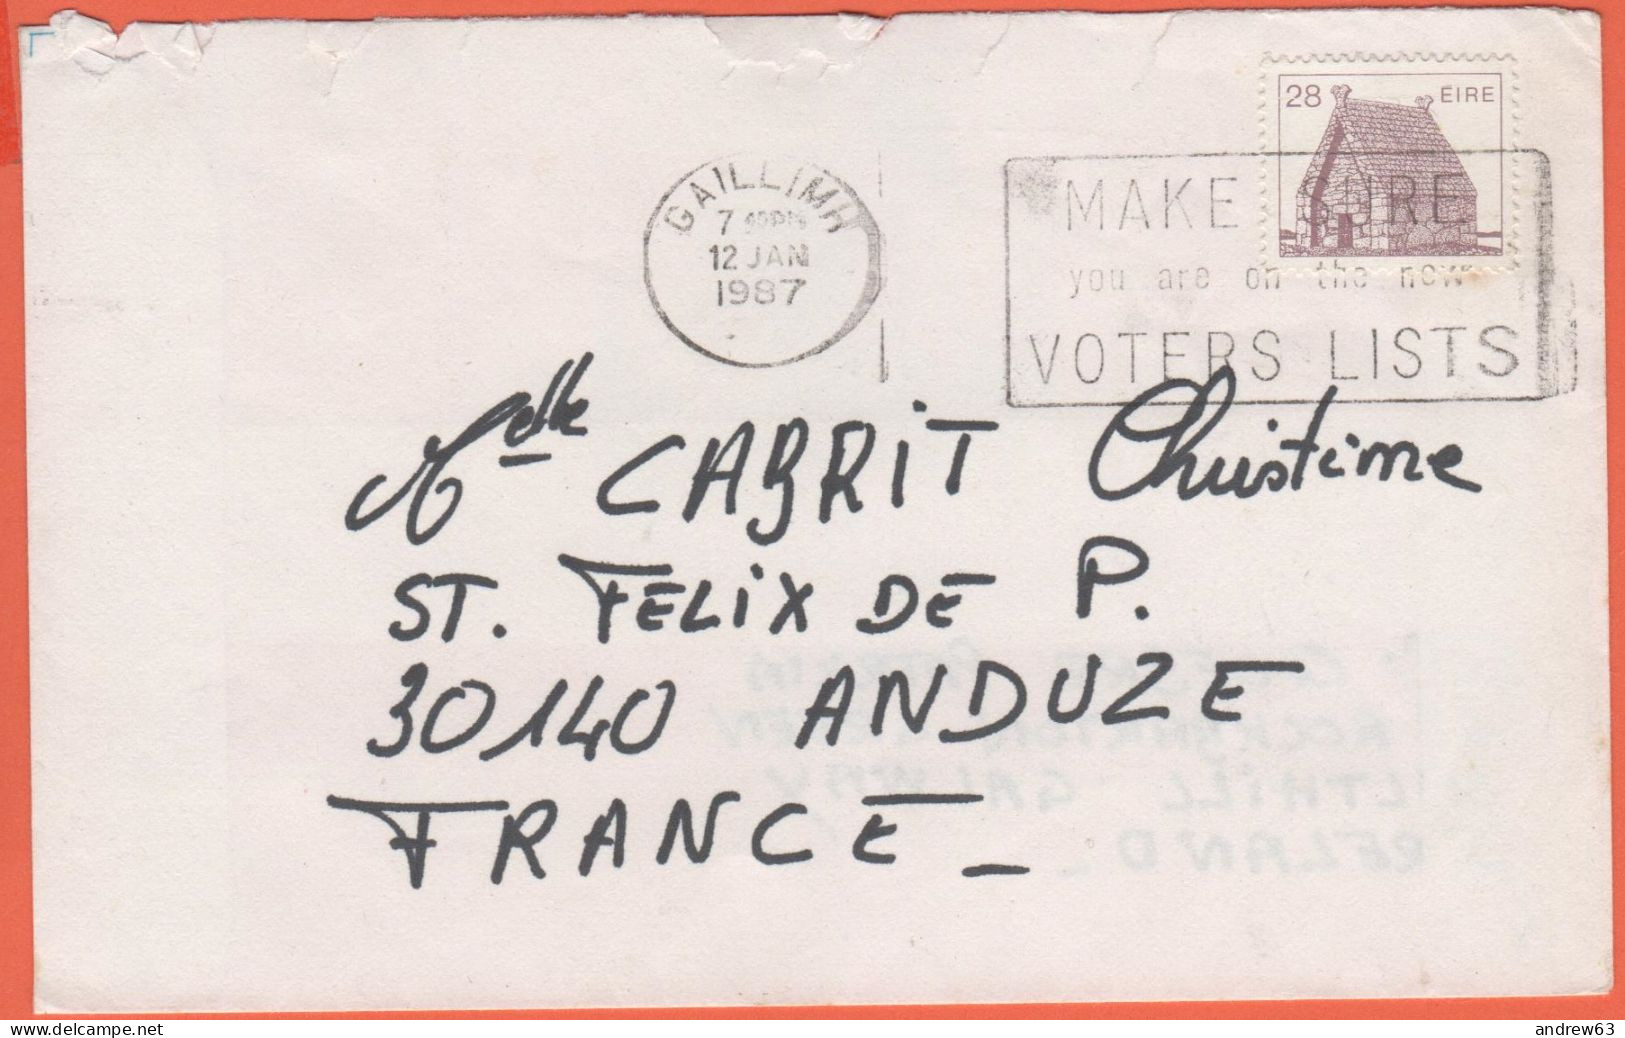 IRLANDA - IRELAND - Irlande - EIRE - 1987 - 28 - Viaggiata Da Gaillimh Per Anduze, France - Storia Postale